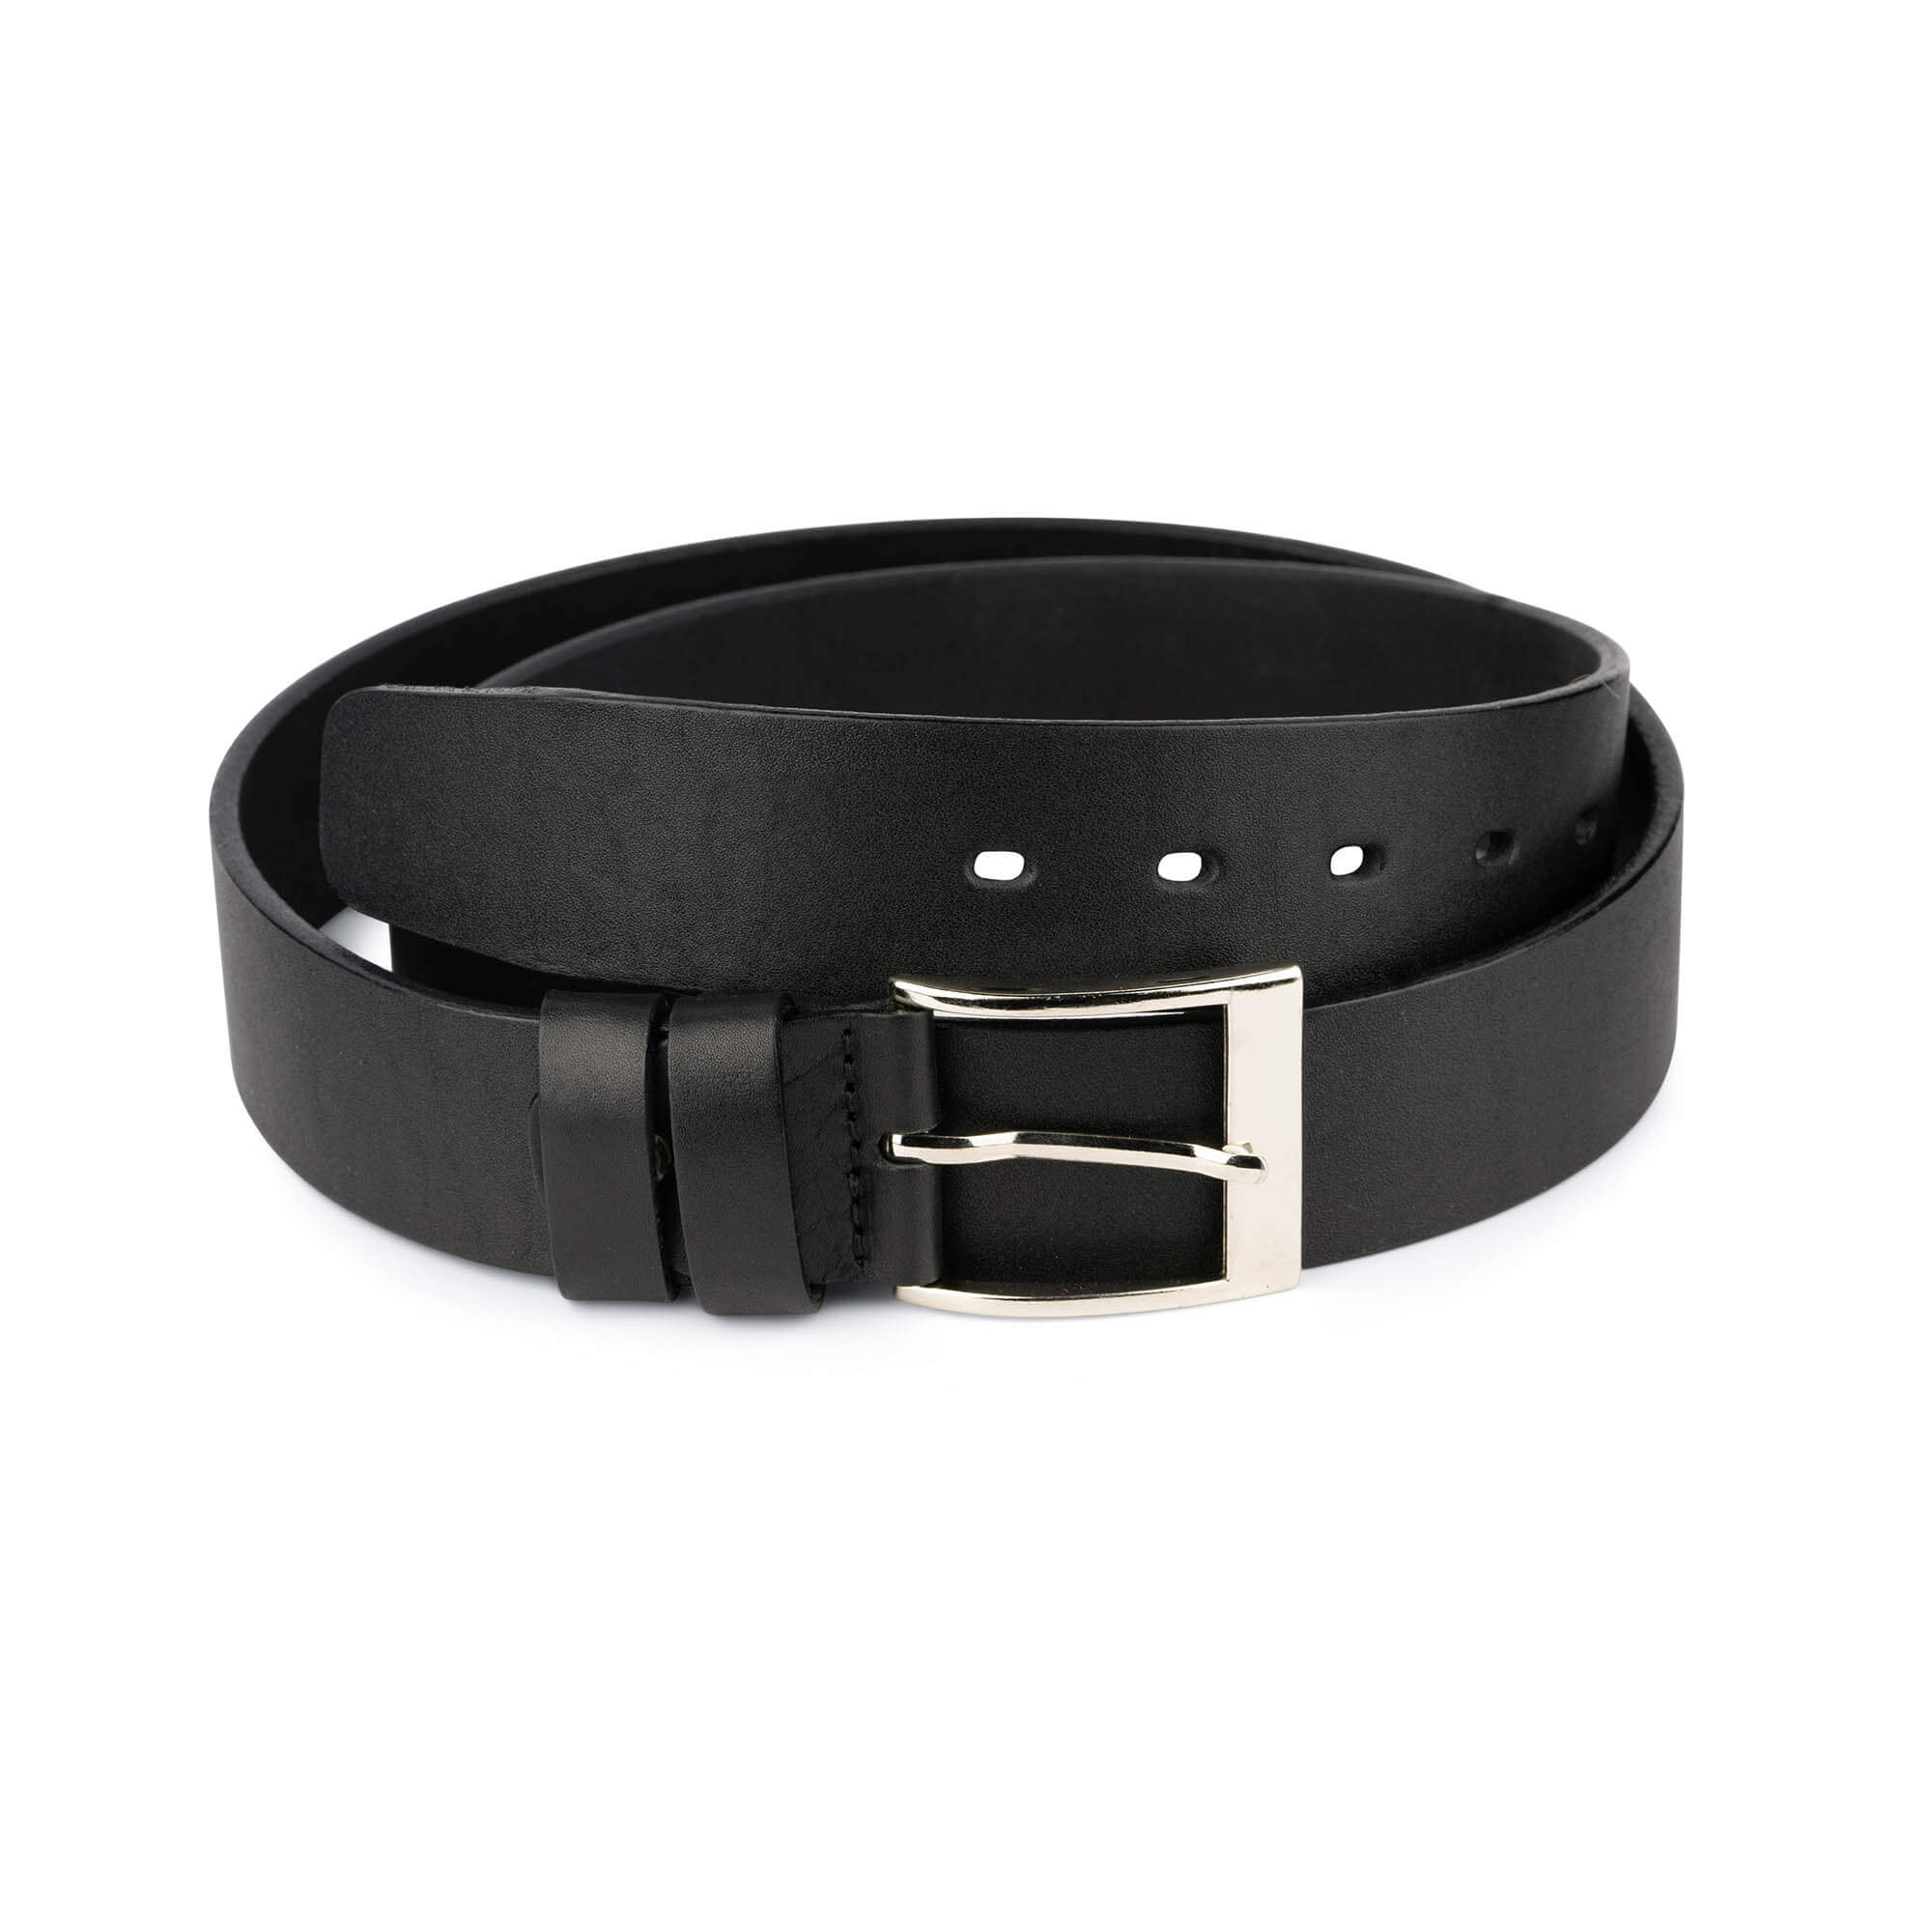 Buy Leather Belts For Men and Women - LeatherBeltsOnline.com